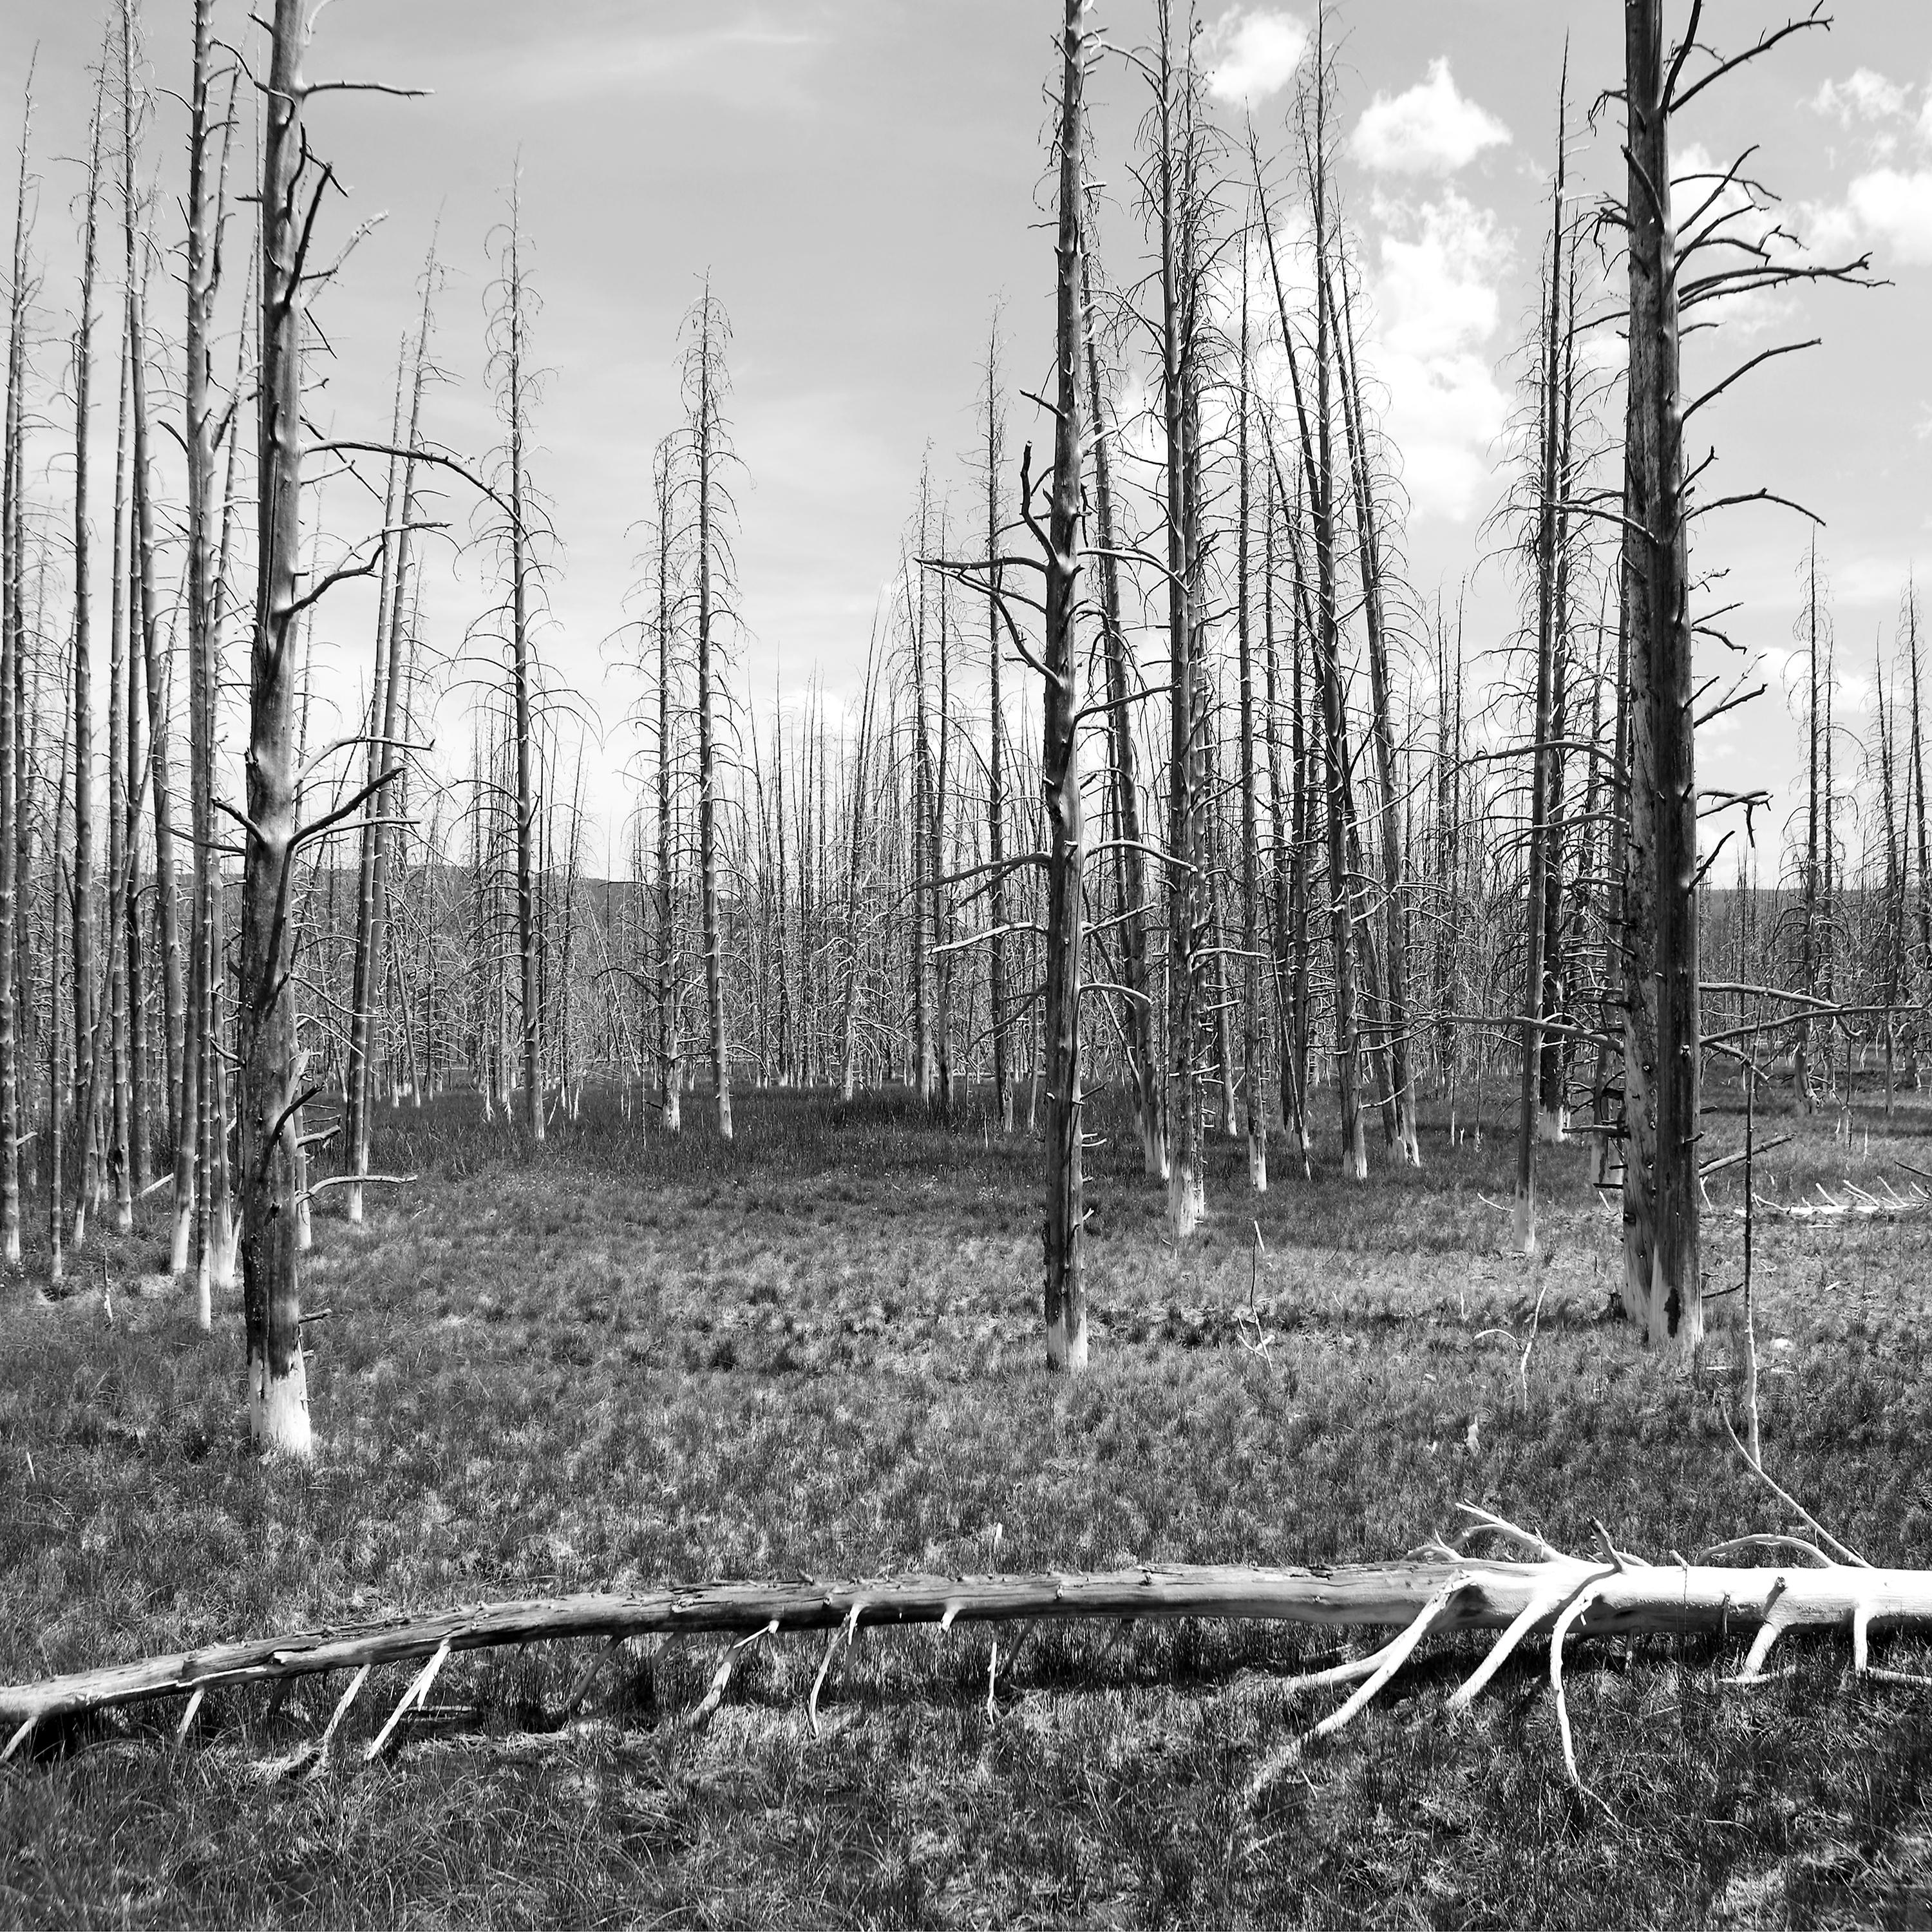 Chris Little Landscape Photograph - 'Burned Forest' - Black and White Photography - Landscape - Walker Evans